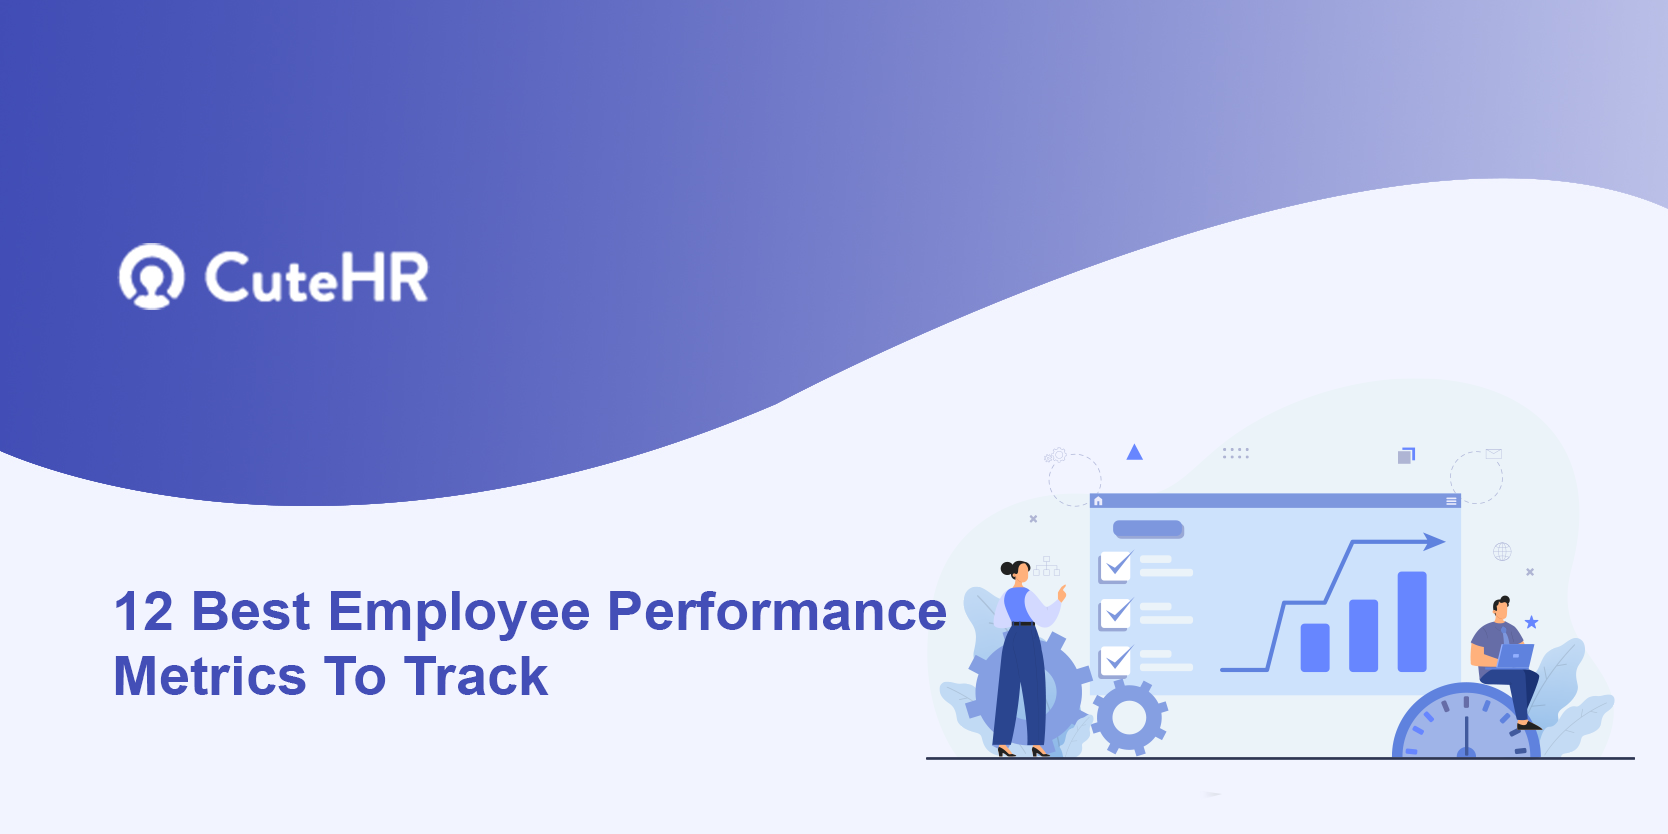 Employee Performance Metrics